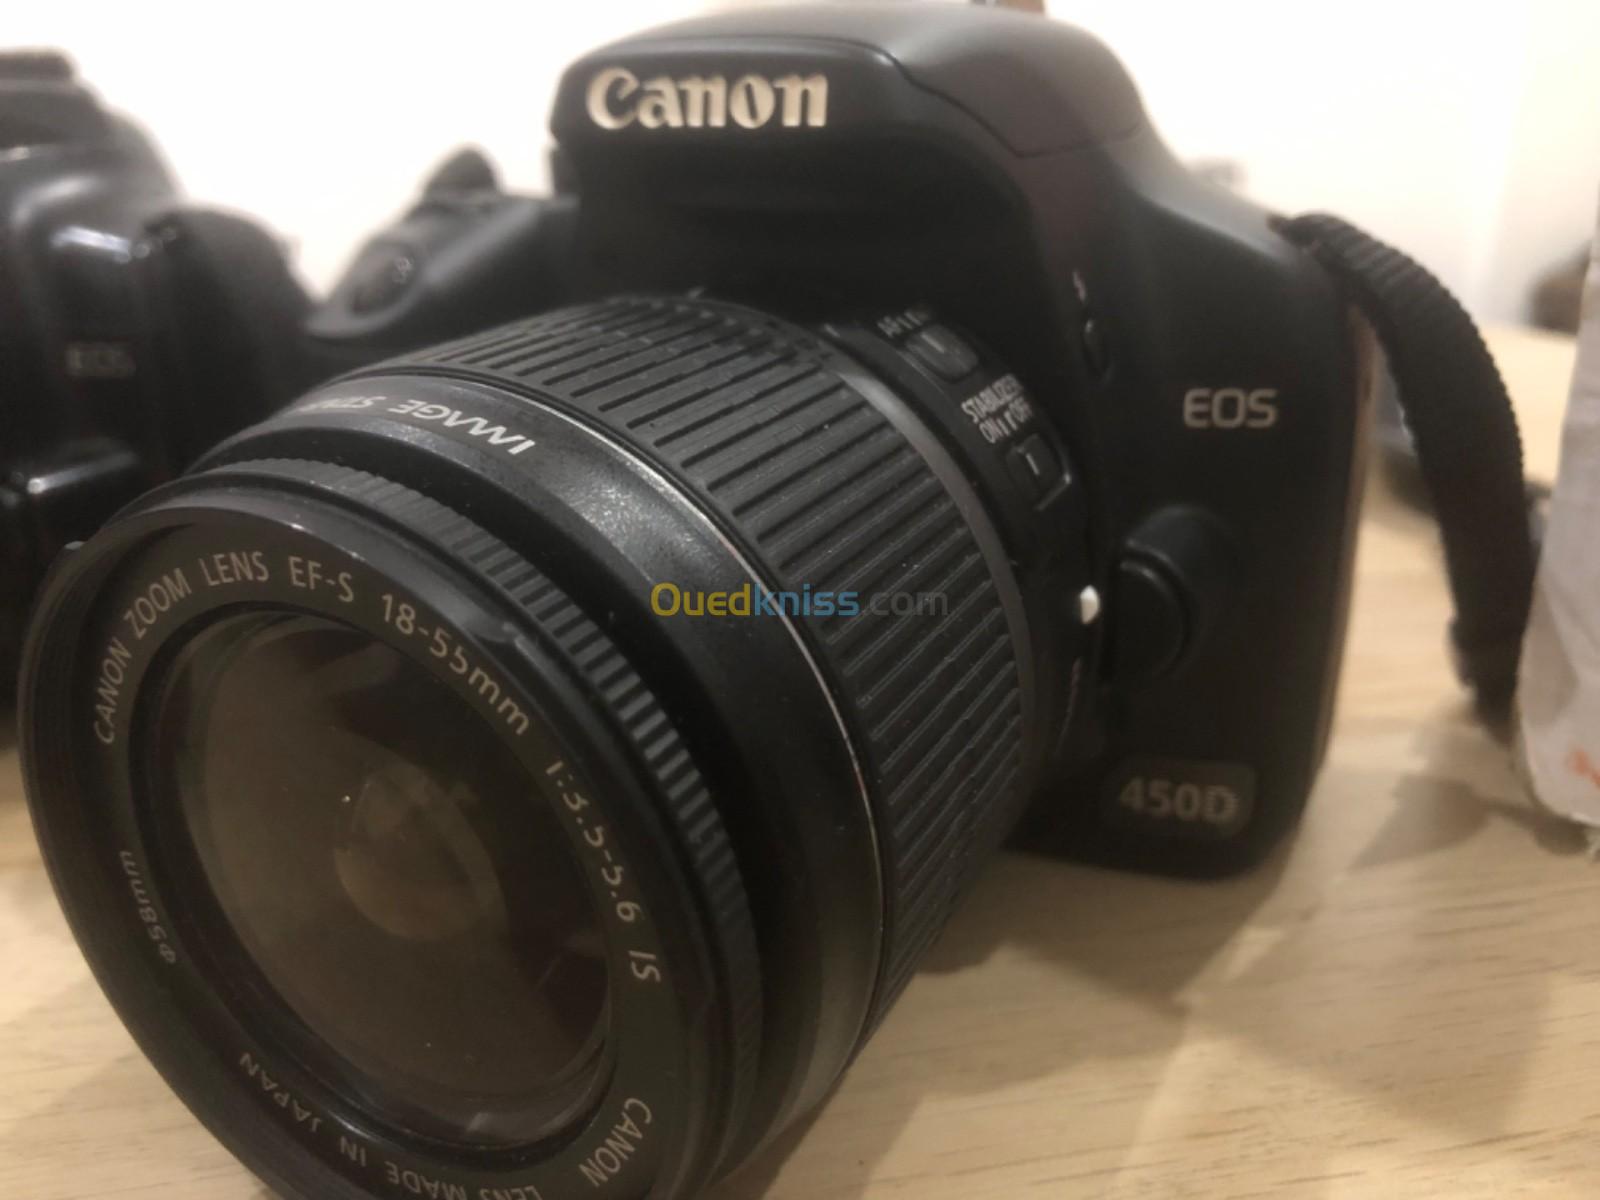  Canon eos / 450d /400d